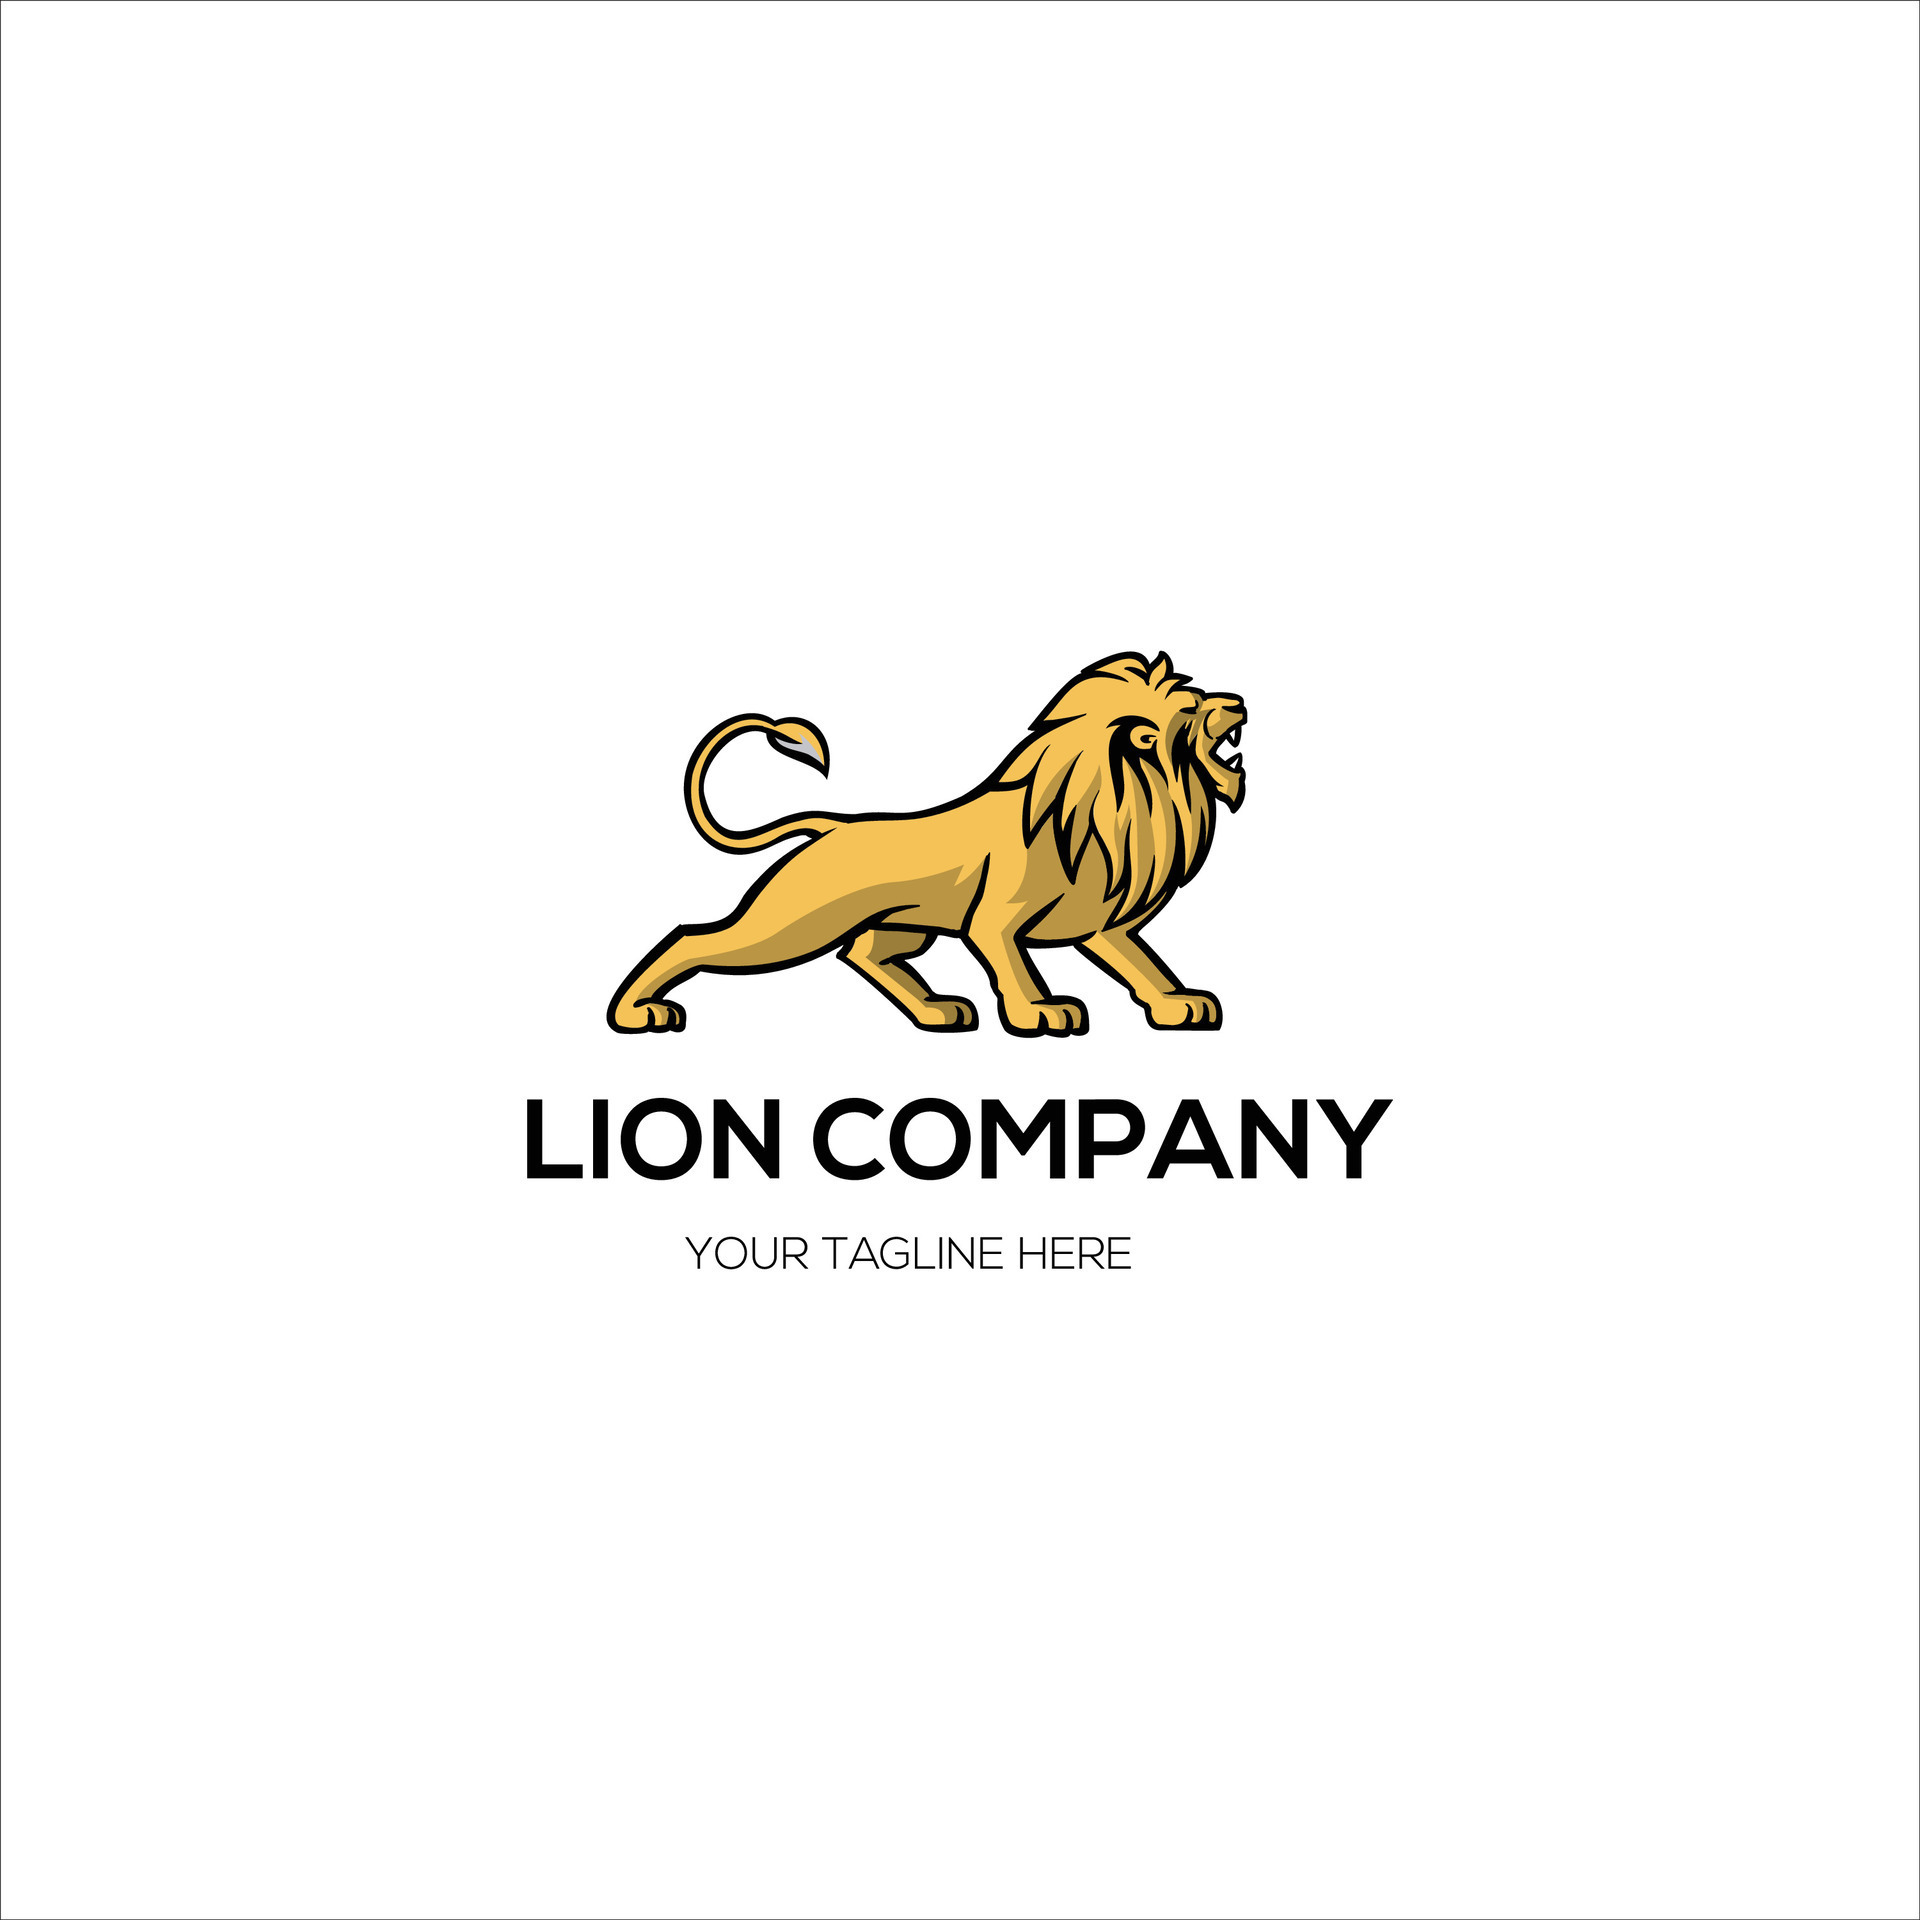 Lion brand logo design 35348441 Vector Art at Vecteezy